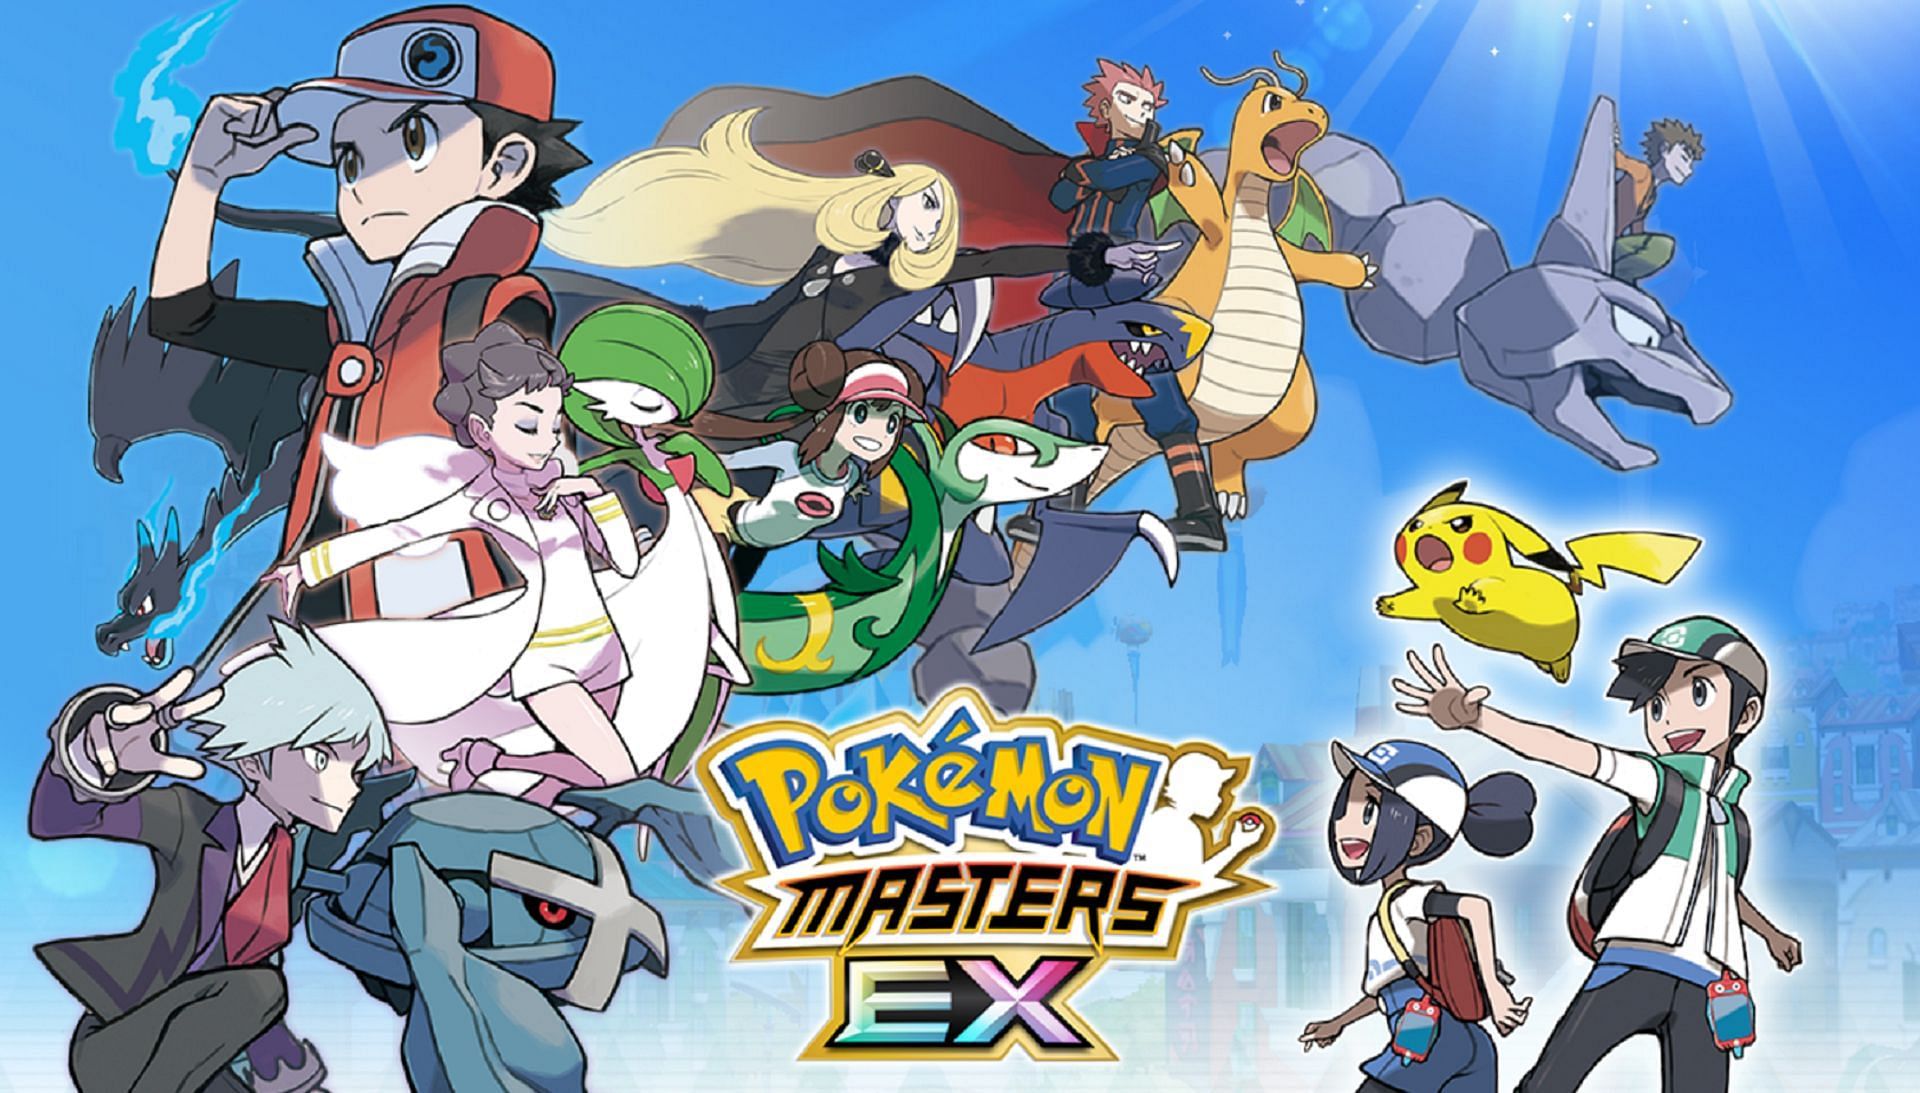 Pokemon Masters EX Tier List